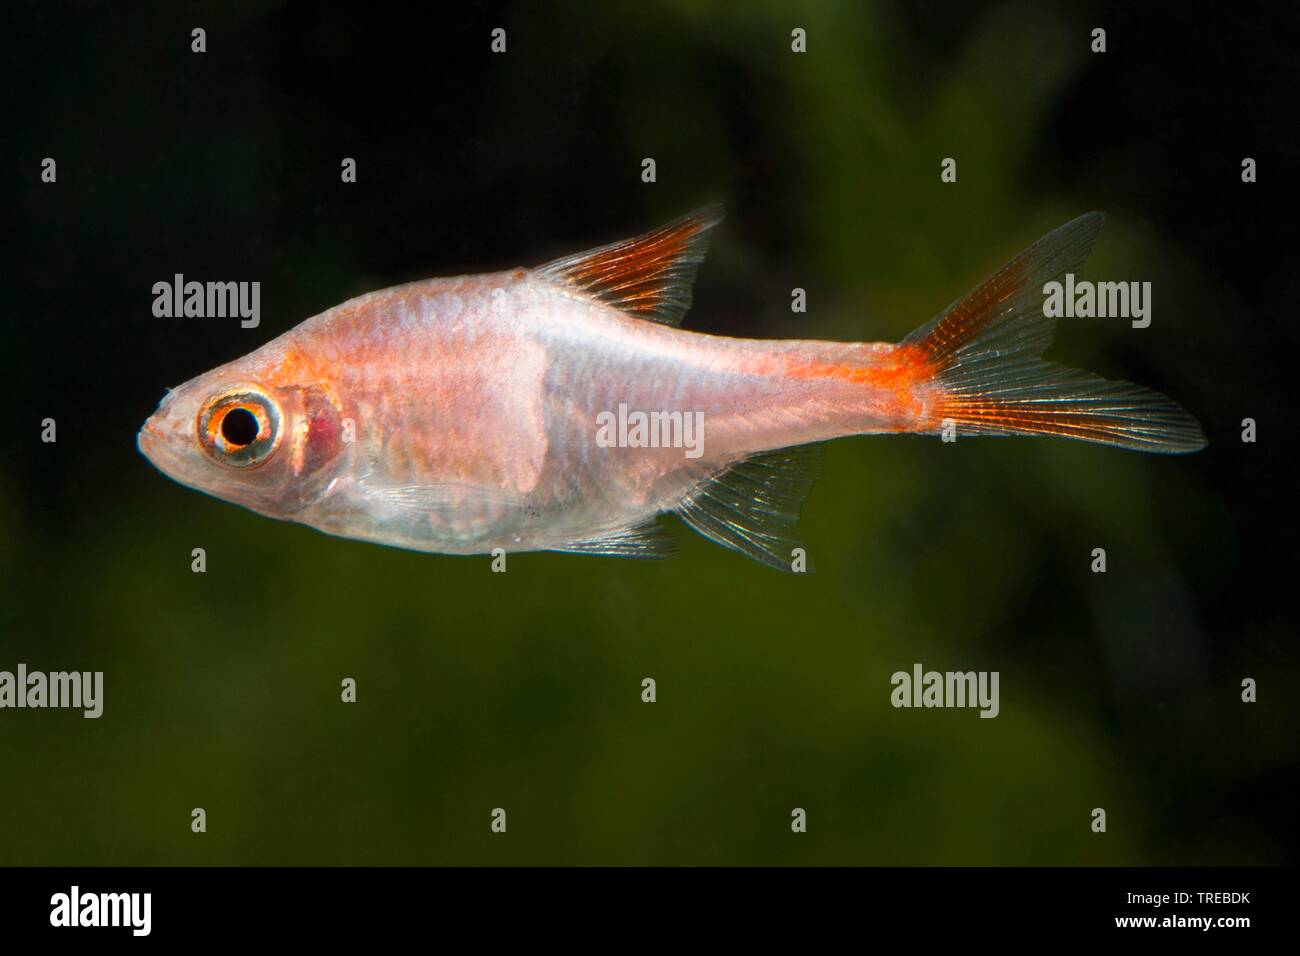 Harlequin Rasbora, Harlequin fish (Trigonostigma heteromorpha, Rasbora heteromorpha), breeding form Gold, side view Stock Photo